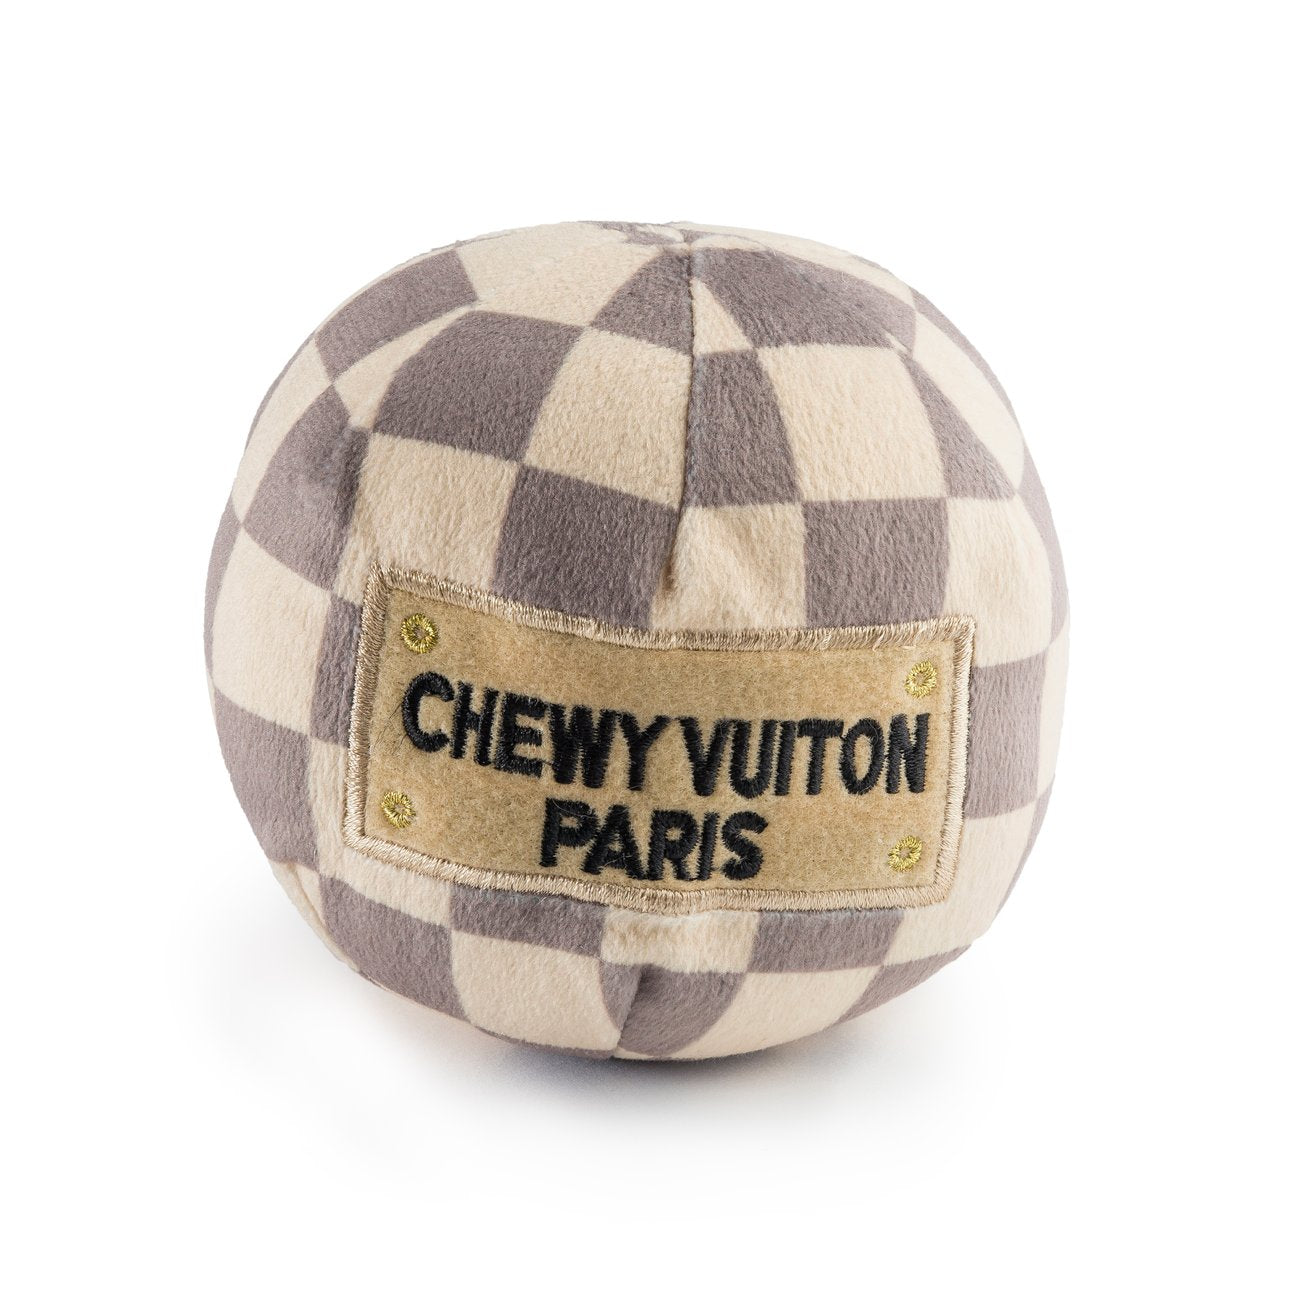 Checker Chewy Vuiton Ball Large